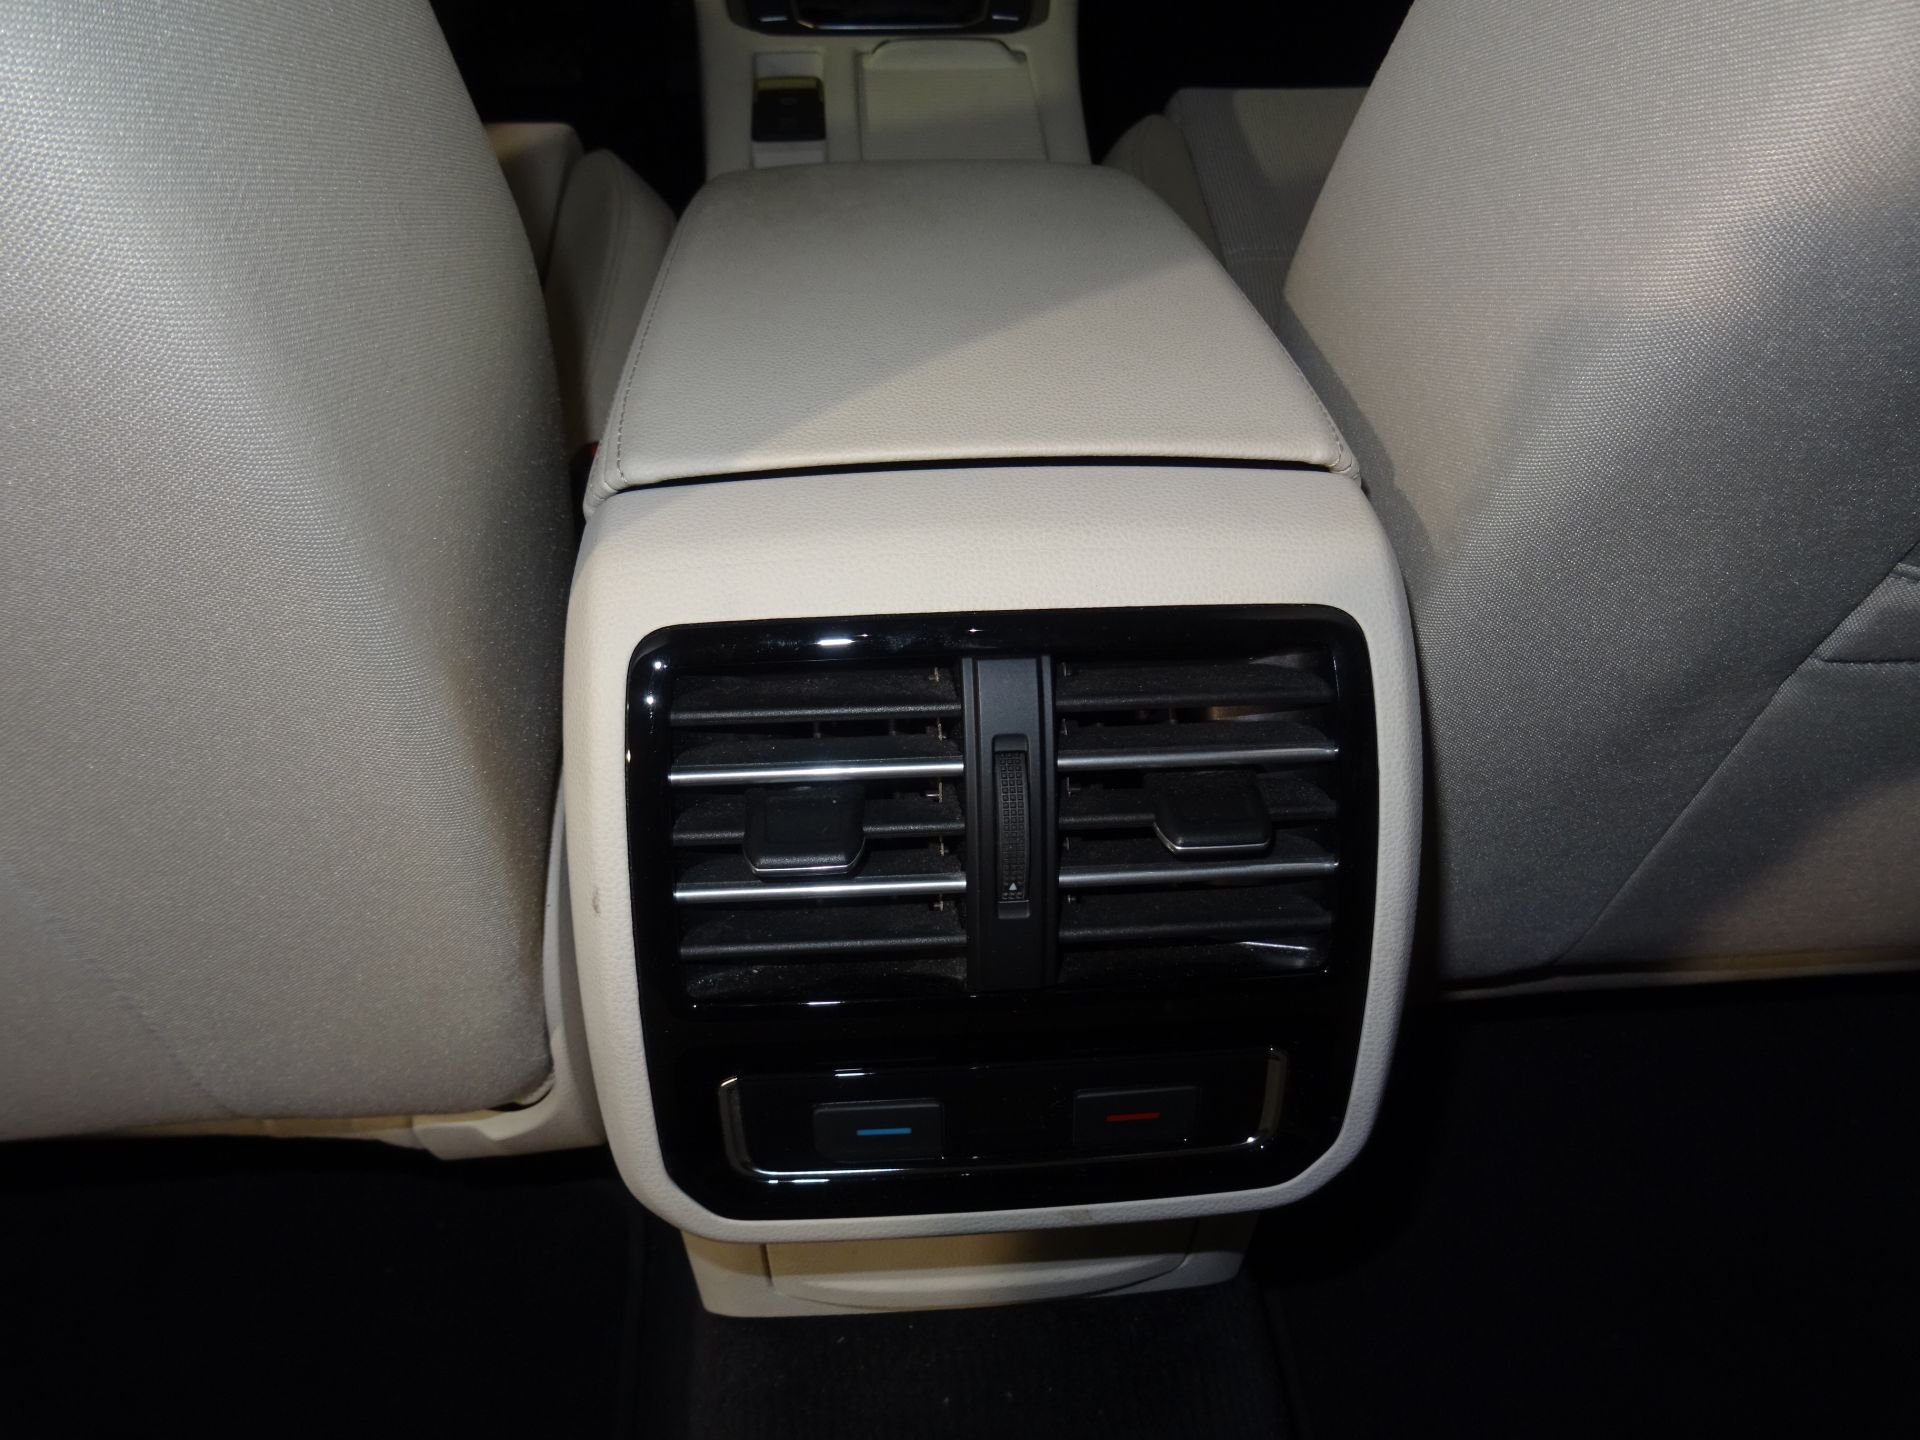 Volkswagen Passat Advance 2.0 TDI 110kW(150CV) DSG Variant